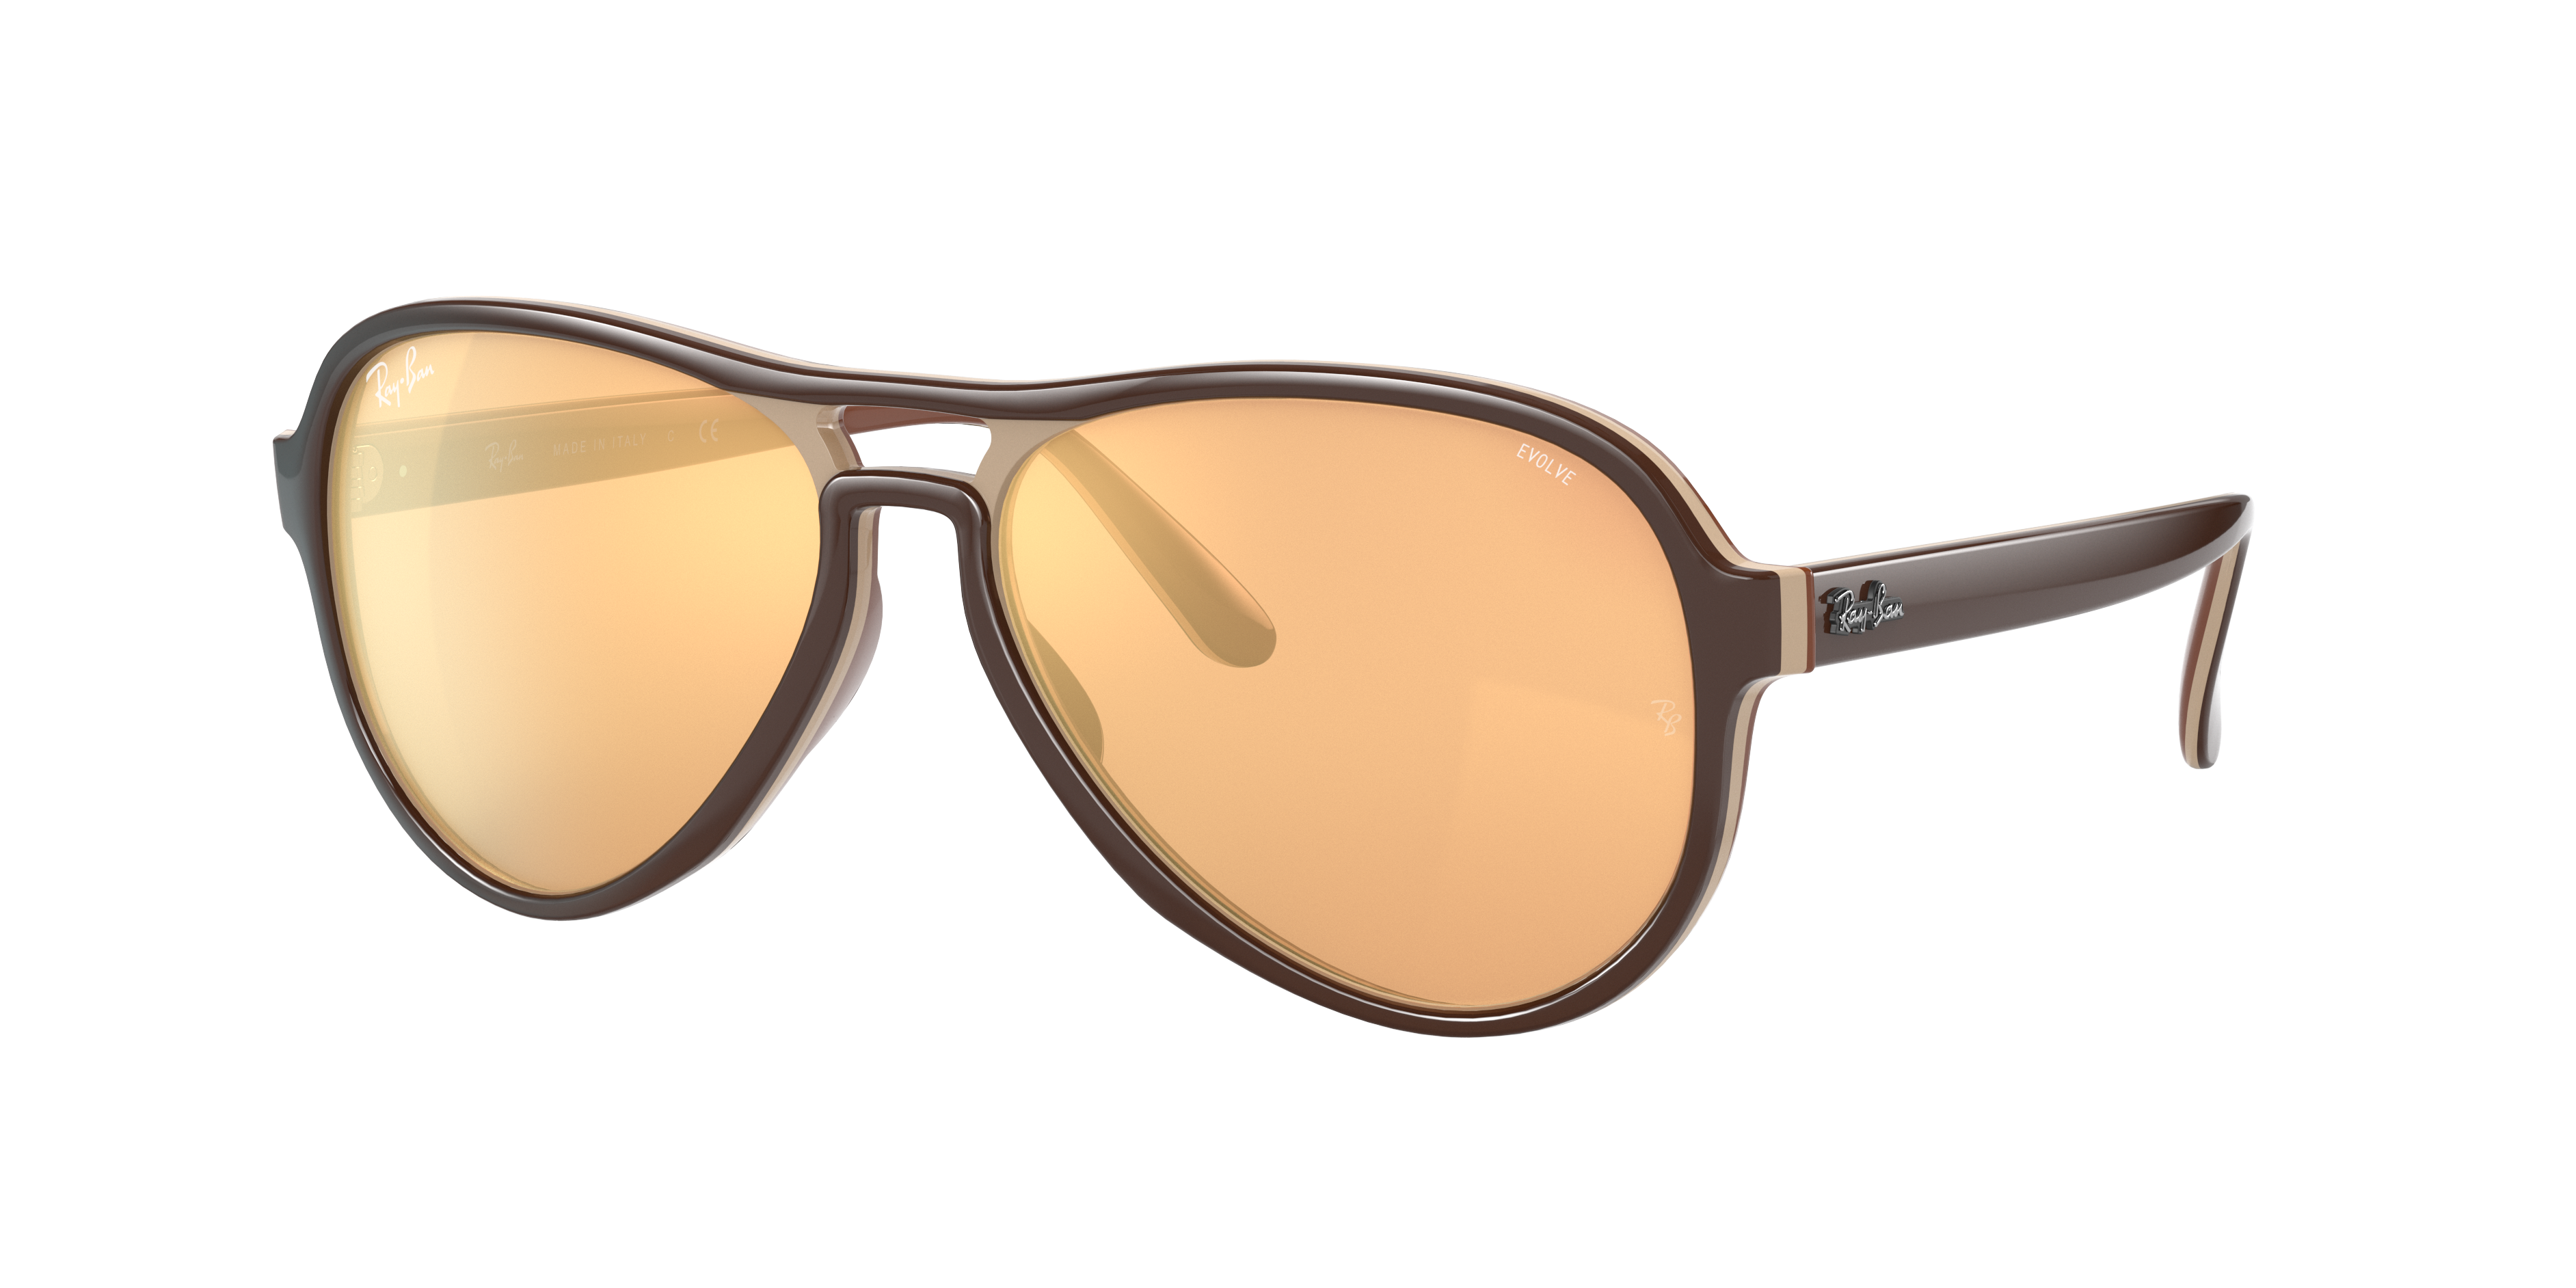 Vagabond Mirror Evolve Sunglasses in Light Brown and Orange Photochromic |  Ray-Ban®